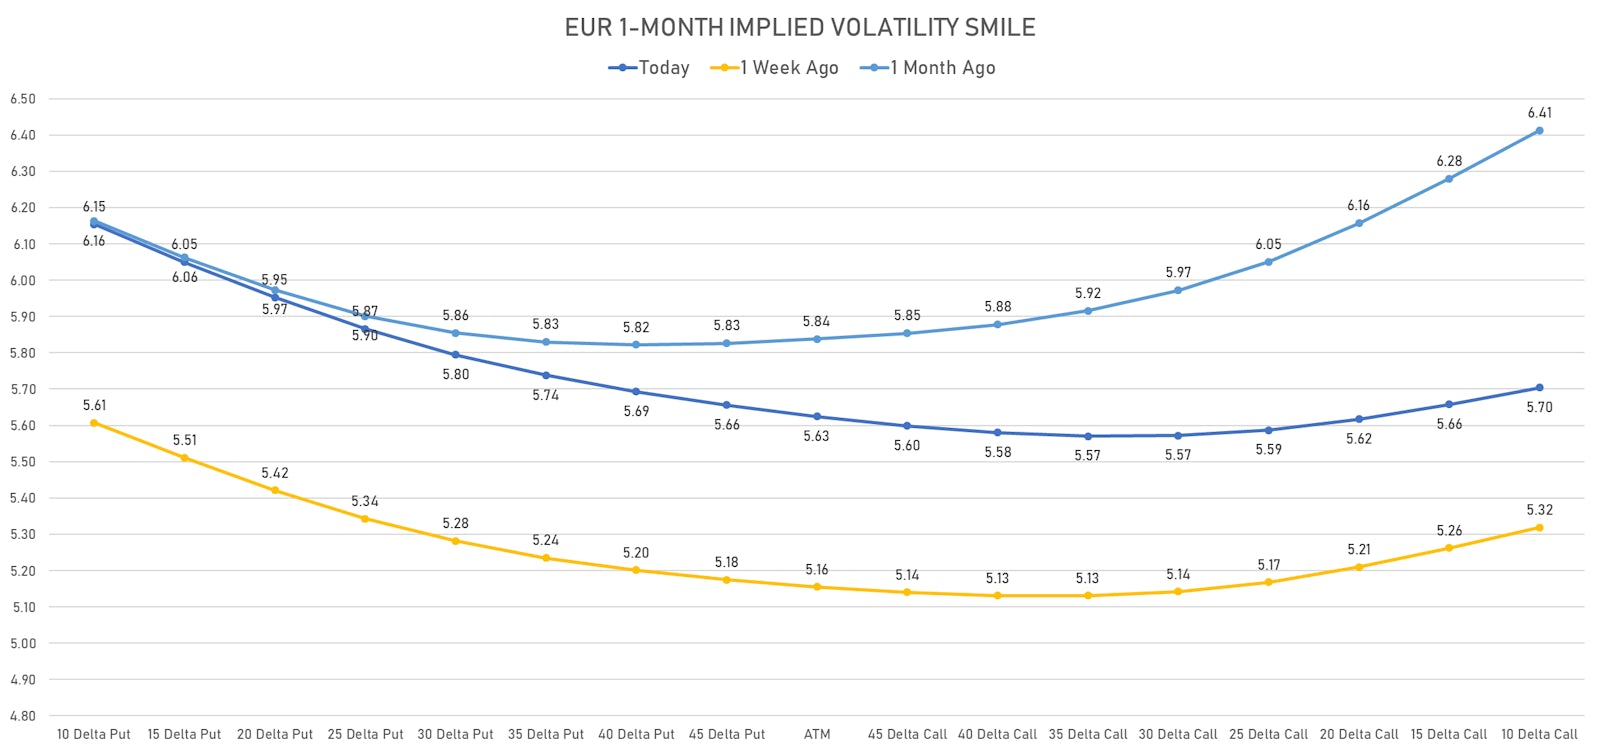 EUR Implied Volatilities | Sources: ϕpost, Refinitiv data